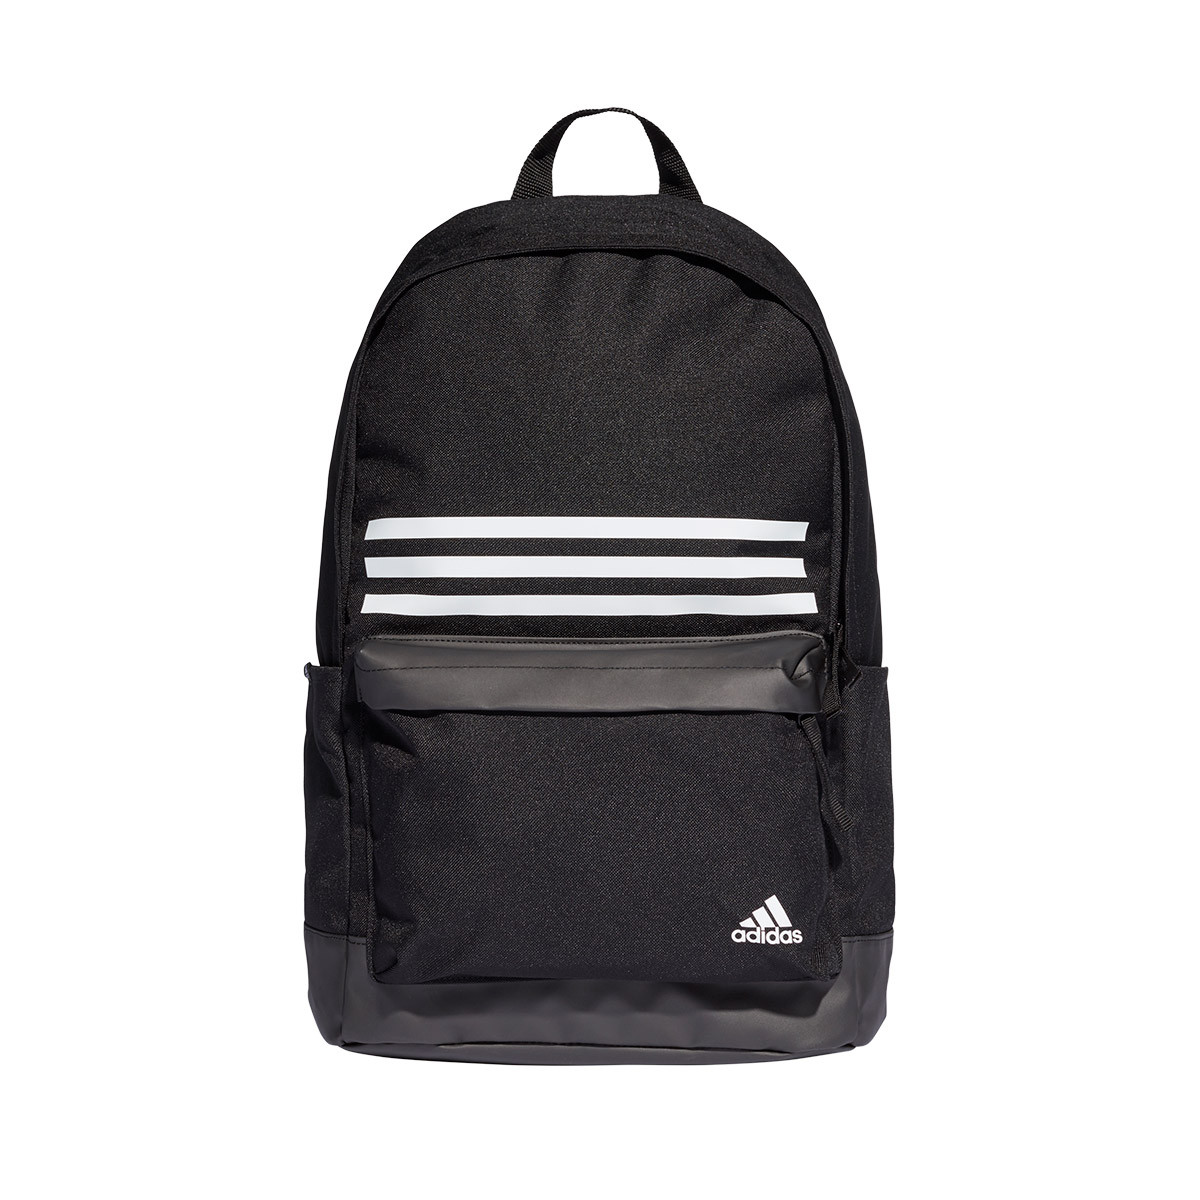 adidas classic bp backpack